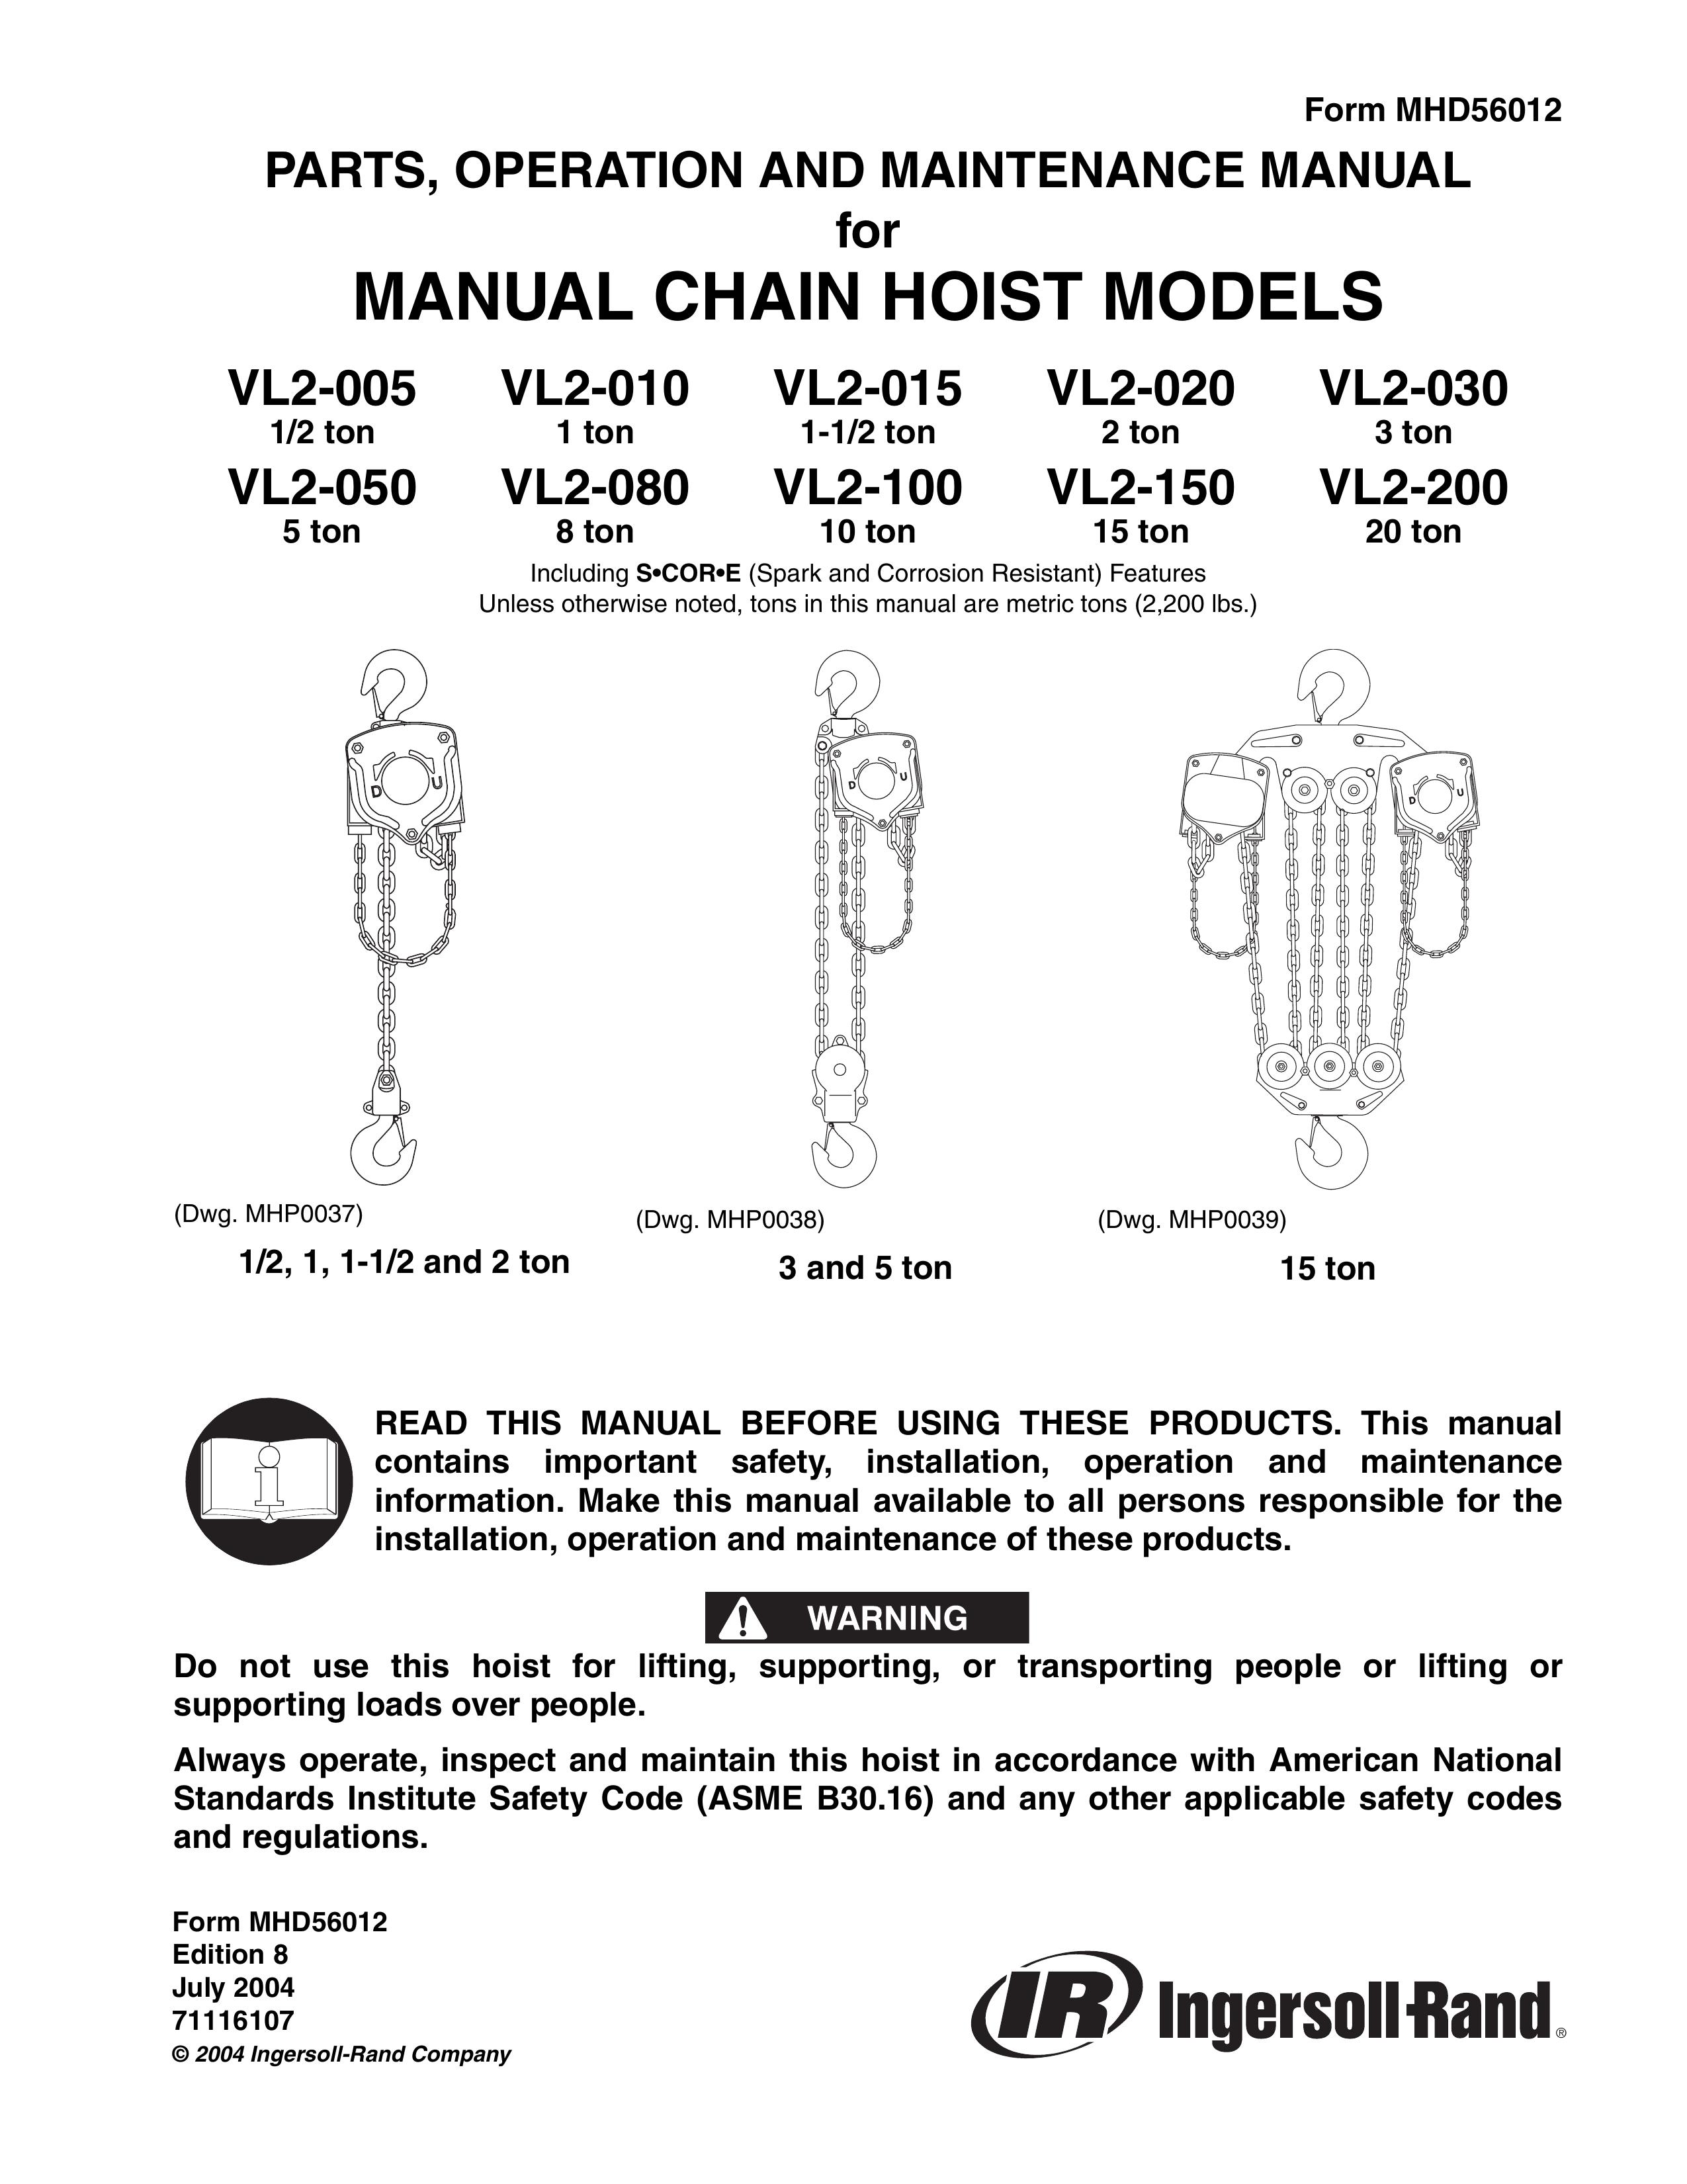 Ingersoll-Rand VL2-015 Digital Photo Keychain User Manual